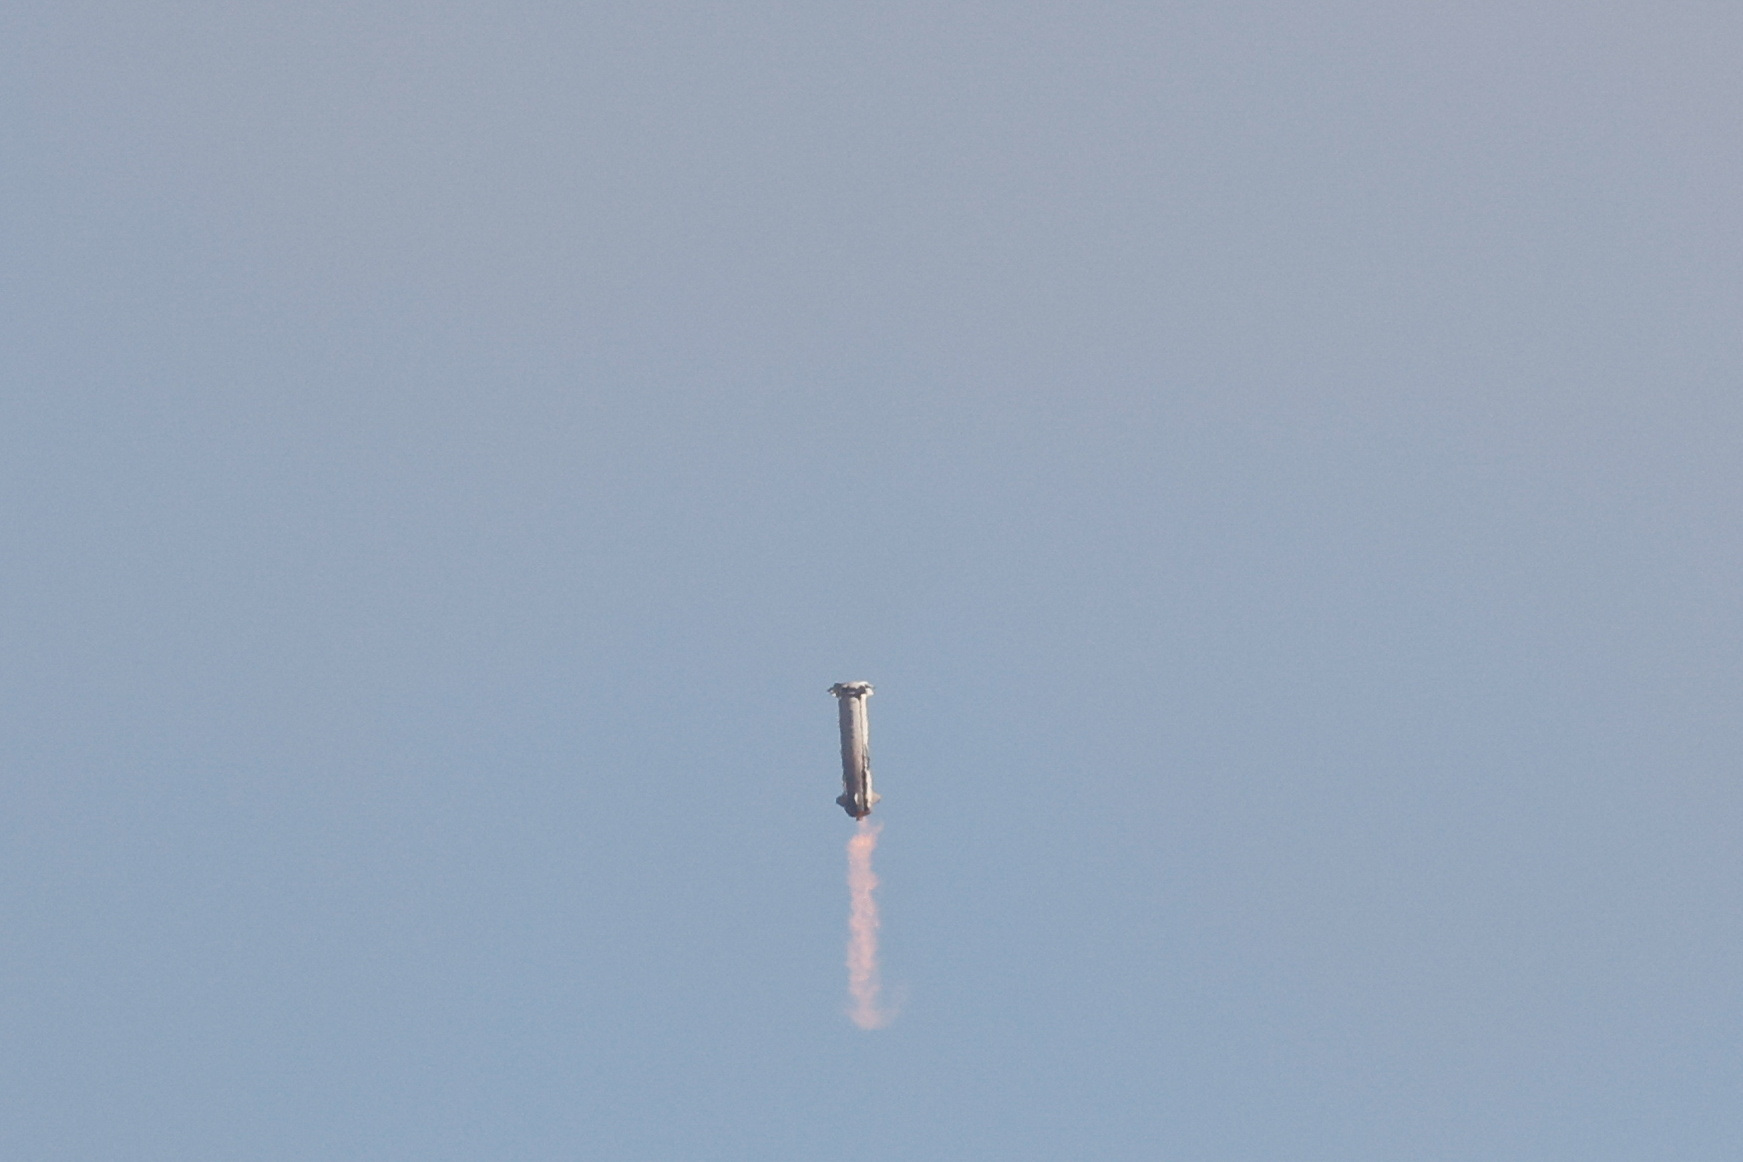 Blue Origin's rocket New Shepard blasts off, near Van Horn, Texas